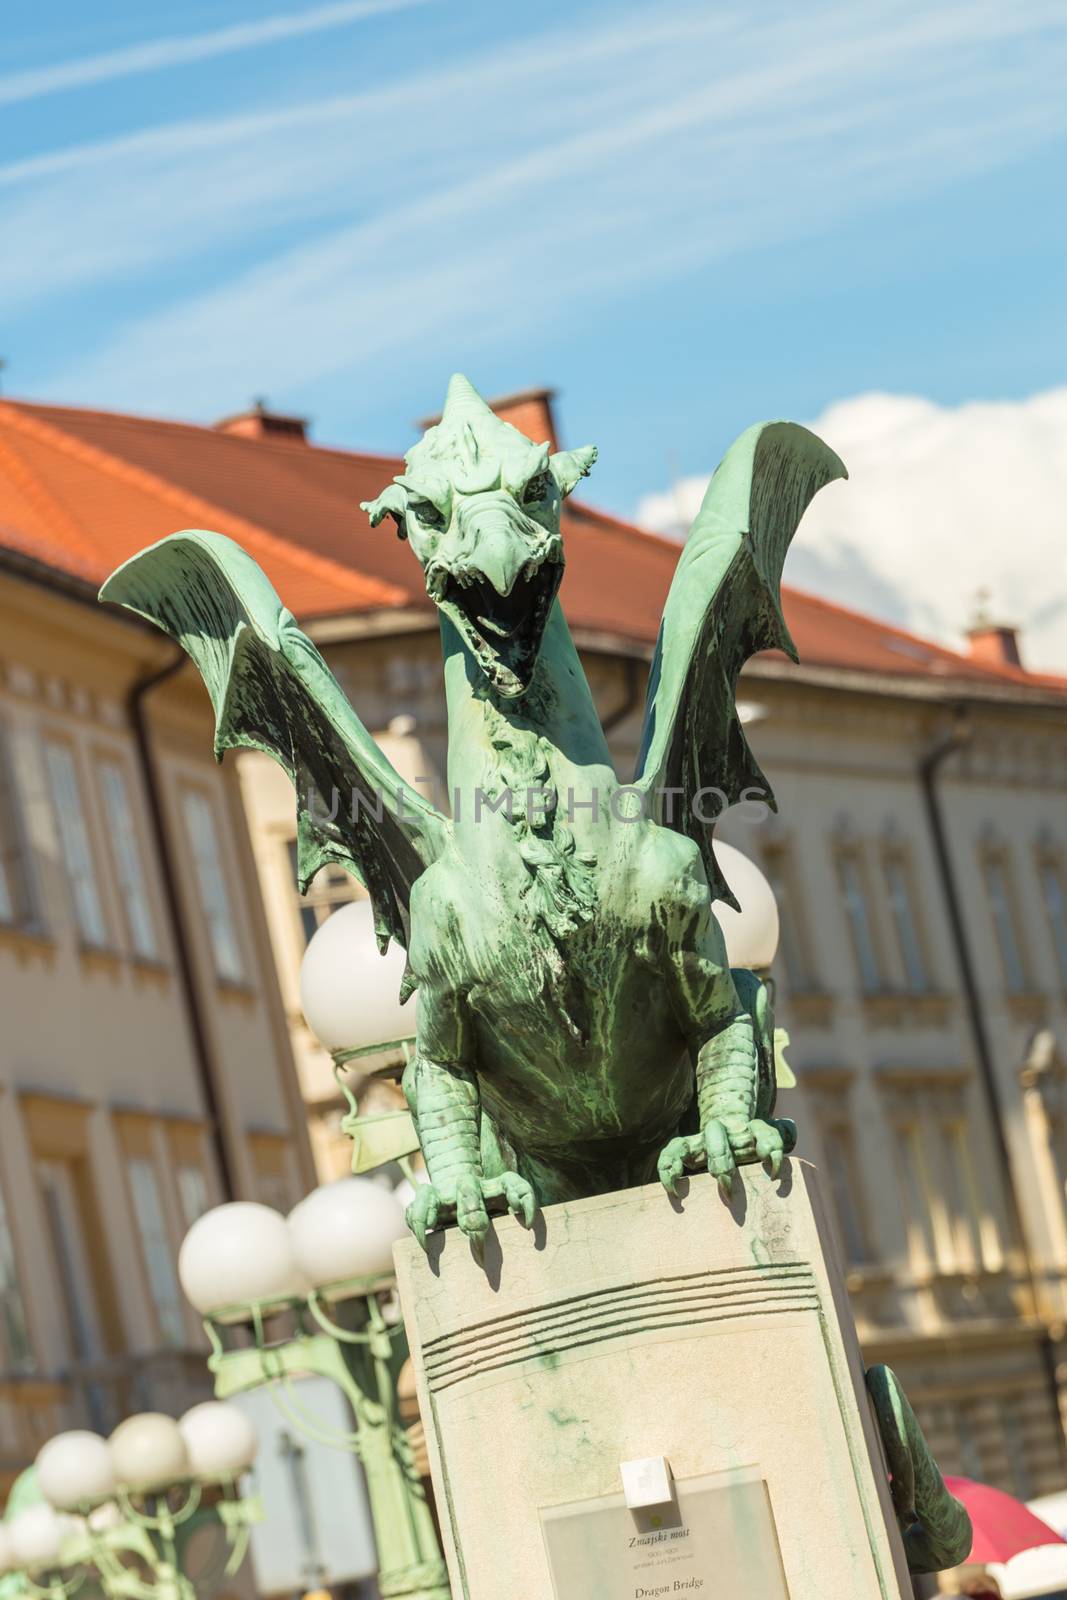 Famous Dragon bridge, Zmajski most, symbol of Ljubljana, capital of Slovenia, Europe.